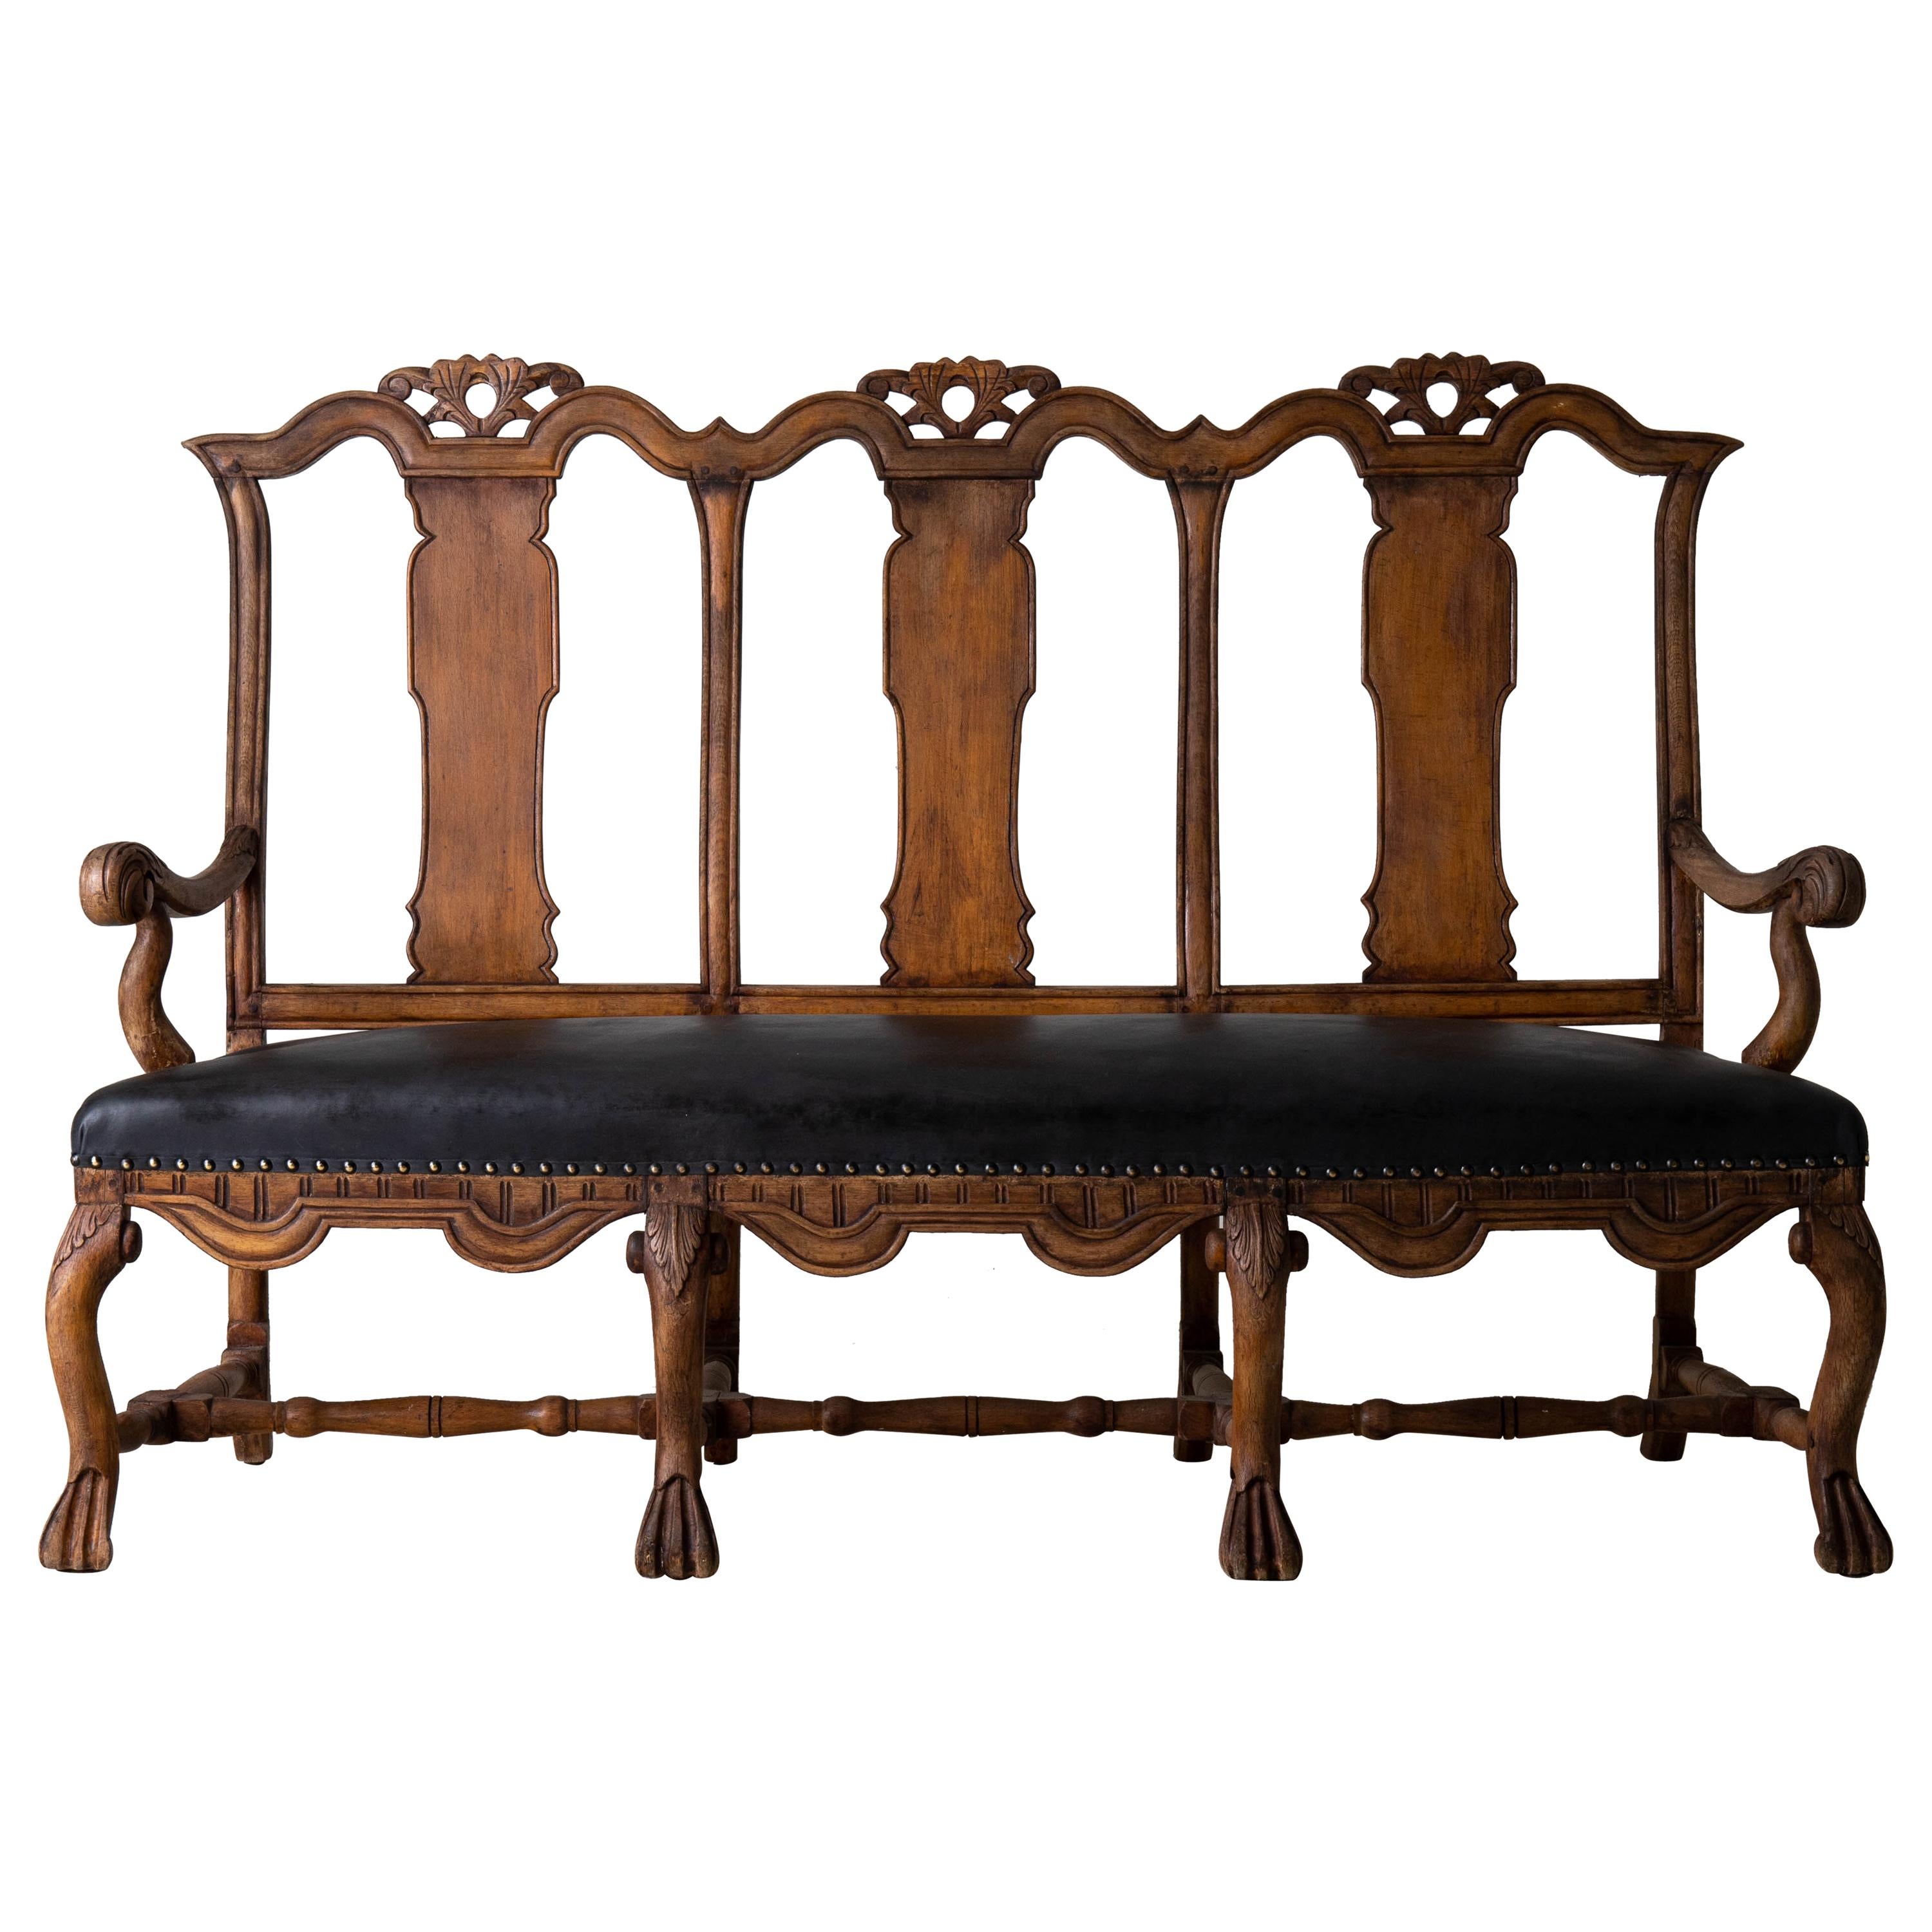 Sofa Bench Swedish Baroque Period 1650-1750 Brown Black, Sweden